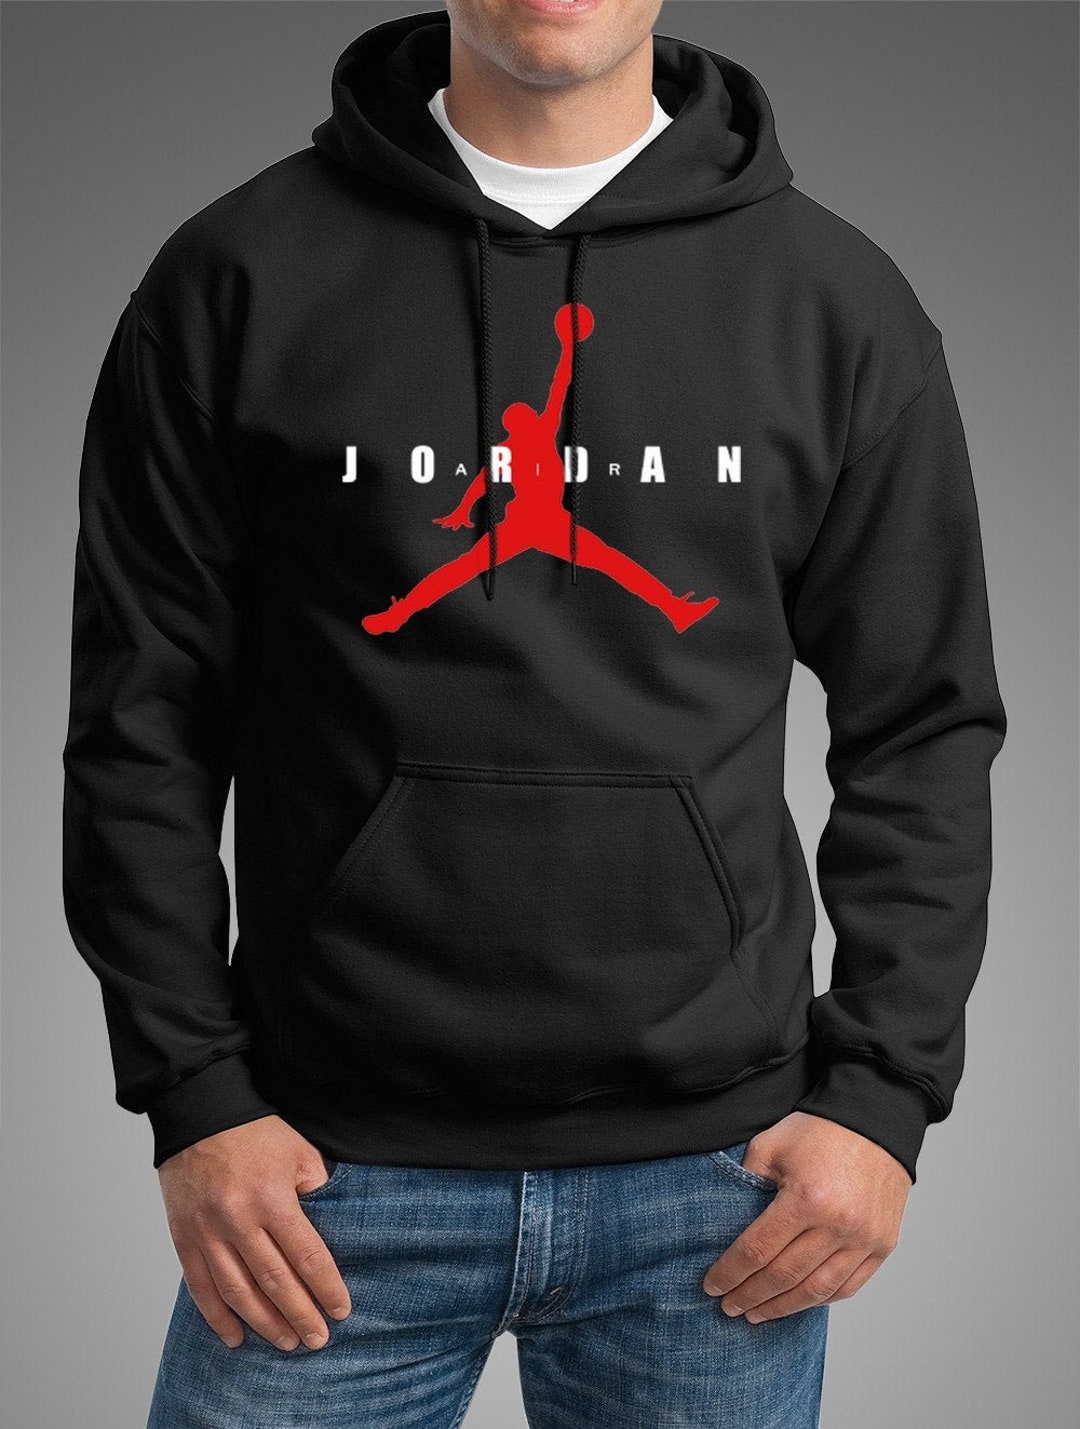 black and white jordan sweatshirt